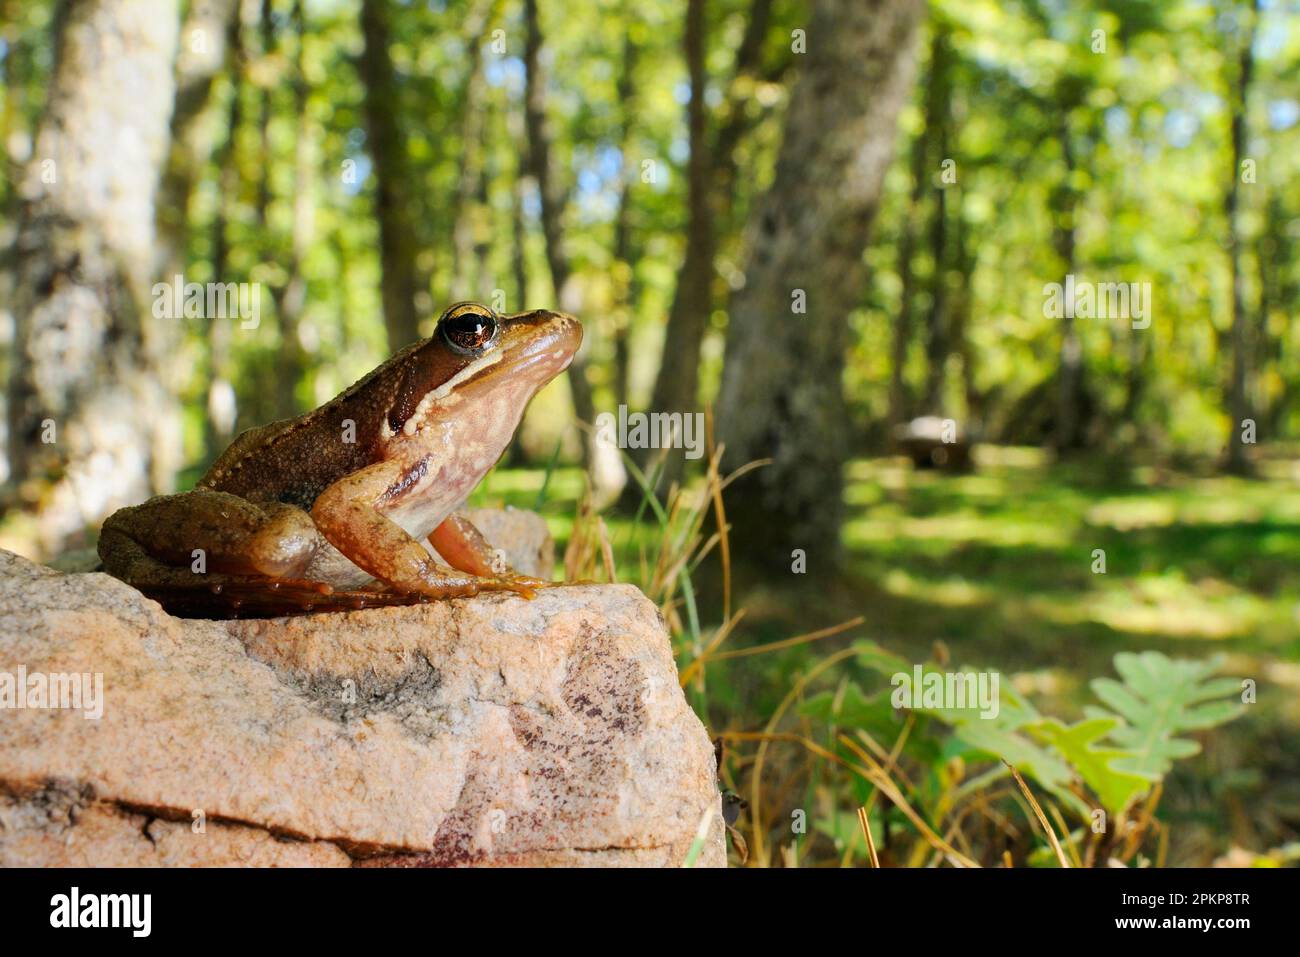 Iberian frog (Rana iberica), Spanish frogs, Amphibians, Other animals, Frogs, Animals, Iberian Frog adult, sitting on rock in woodland habitat, Spain, Stock Photo